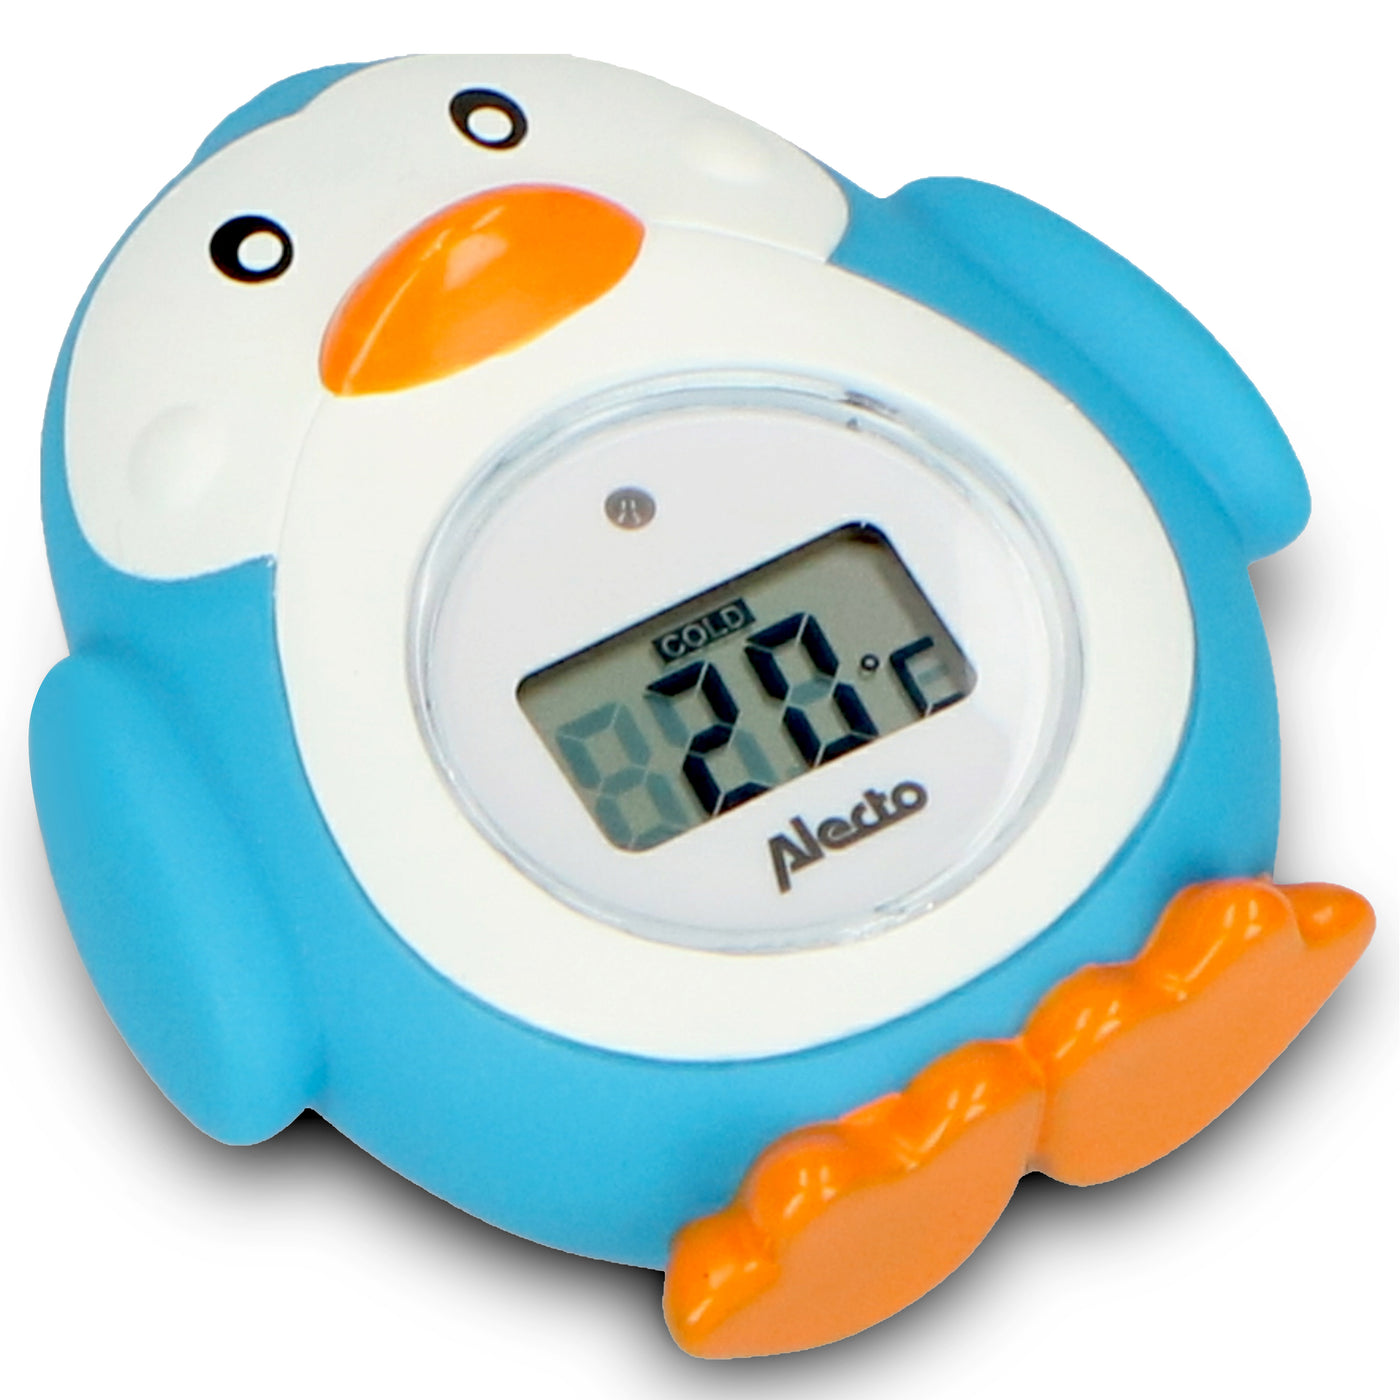 Alecto BC-11 PENGUIN - Thermomètre de bain et de chambre, pingouin